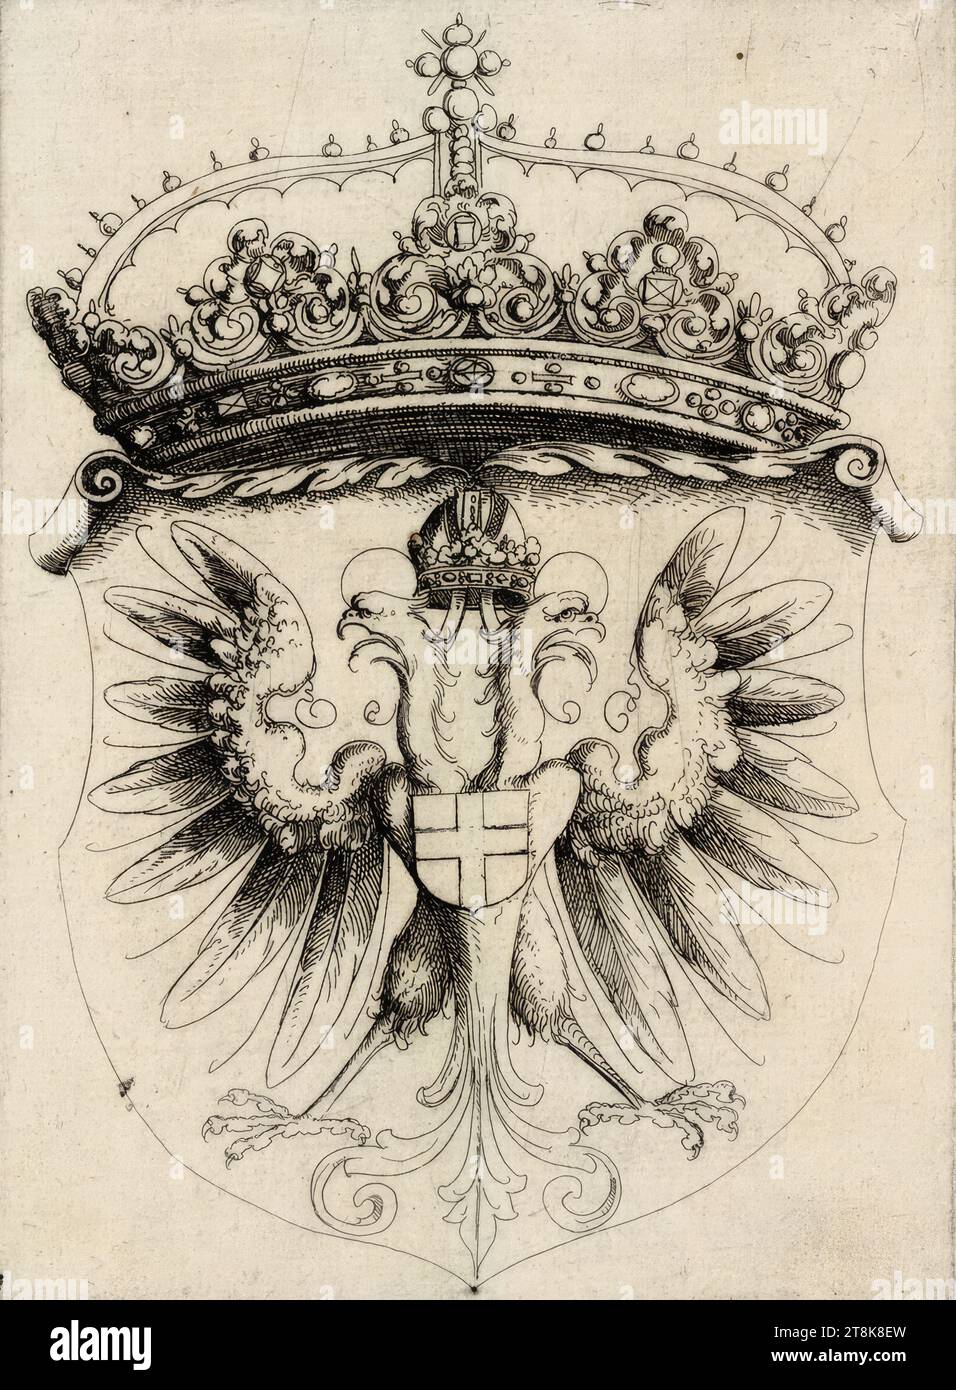 File:Austrian Historical plate.jpg - Wikimedia Commons